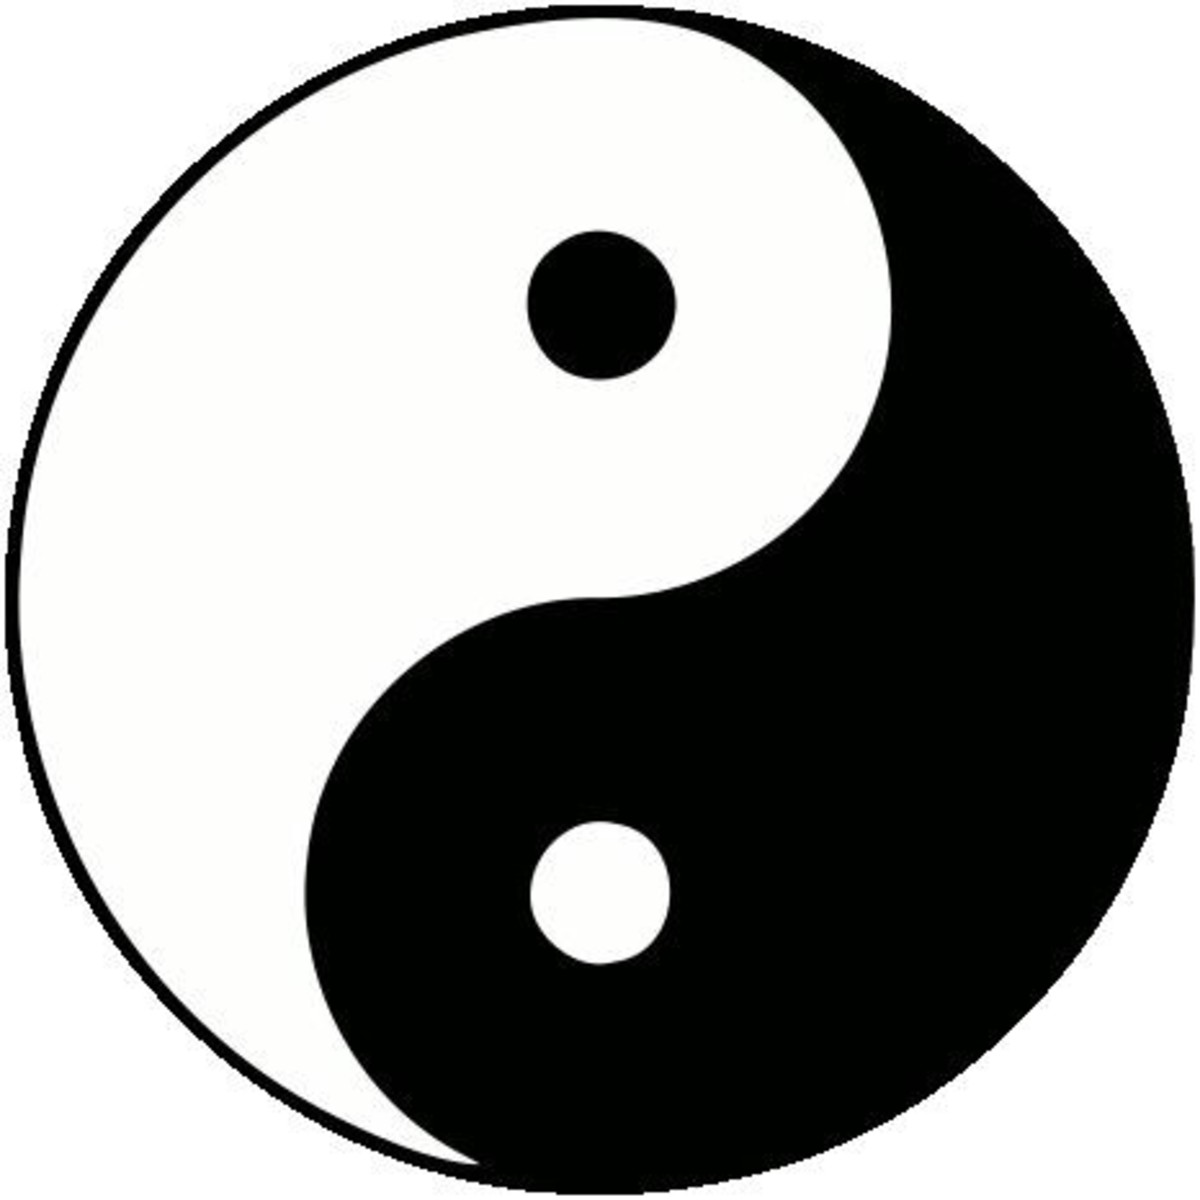 The Taoist Symbol